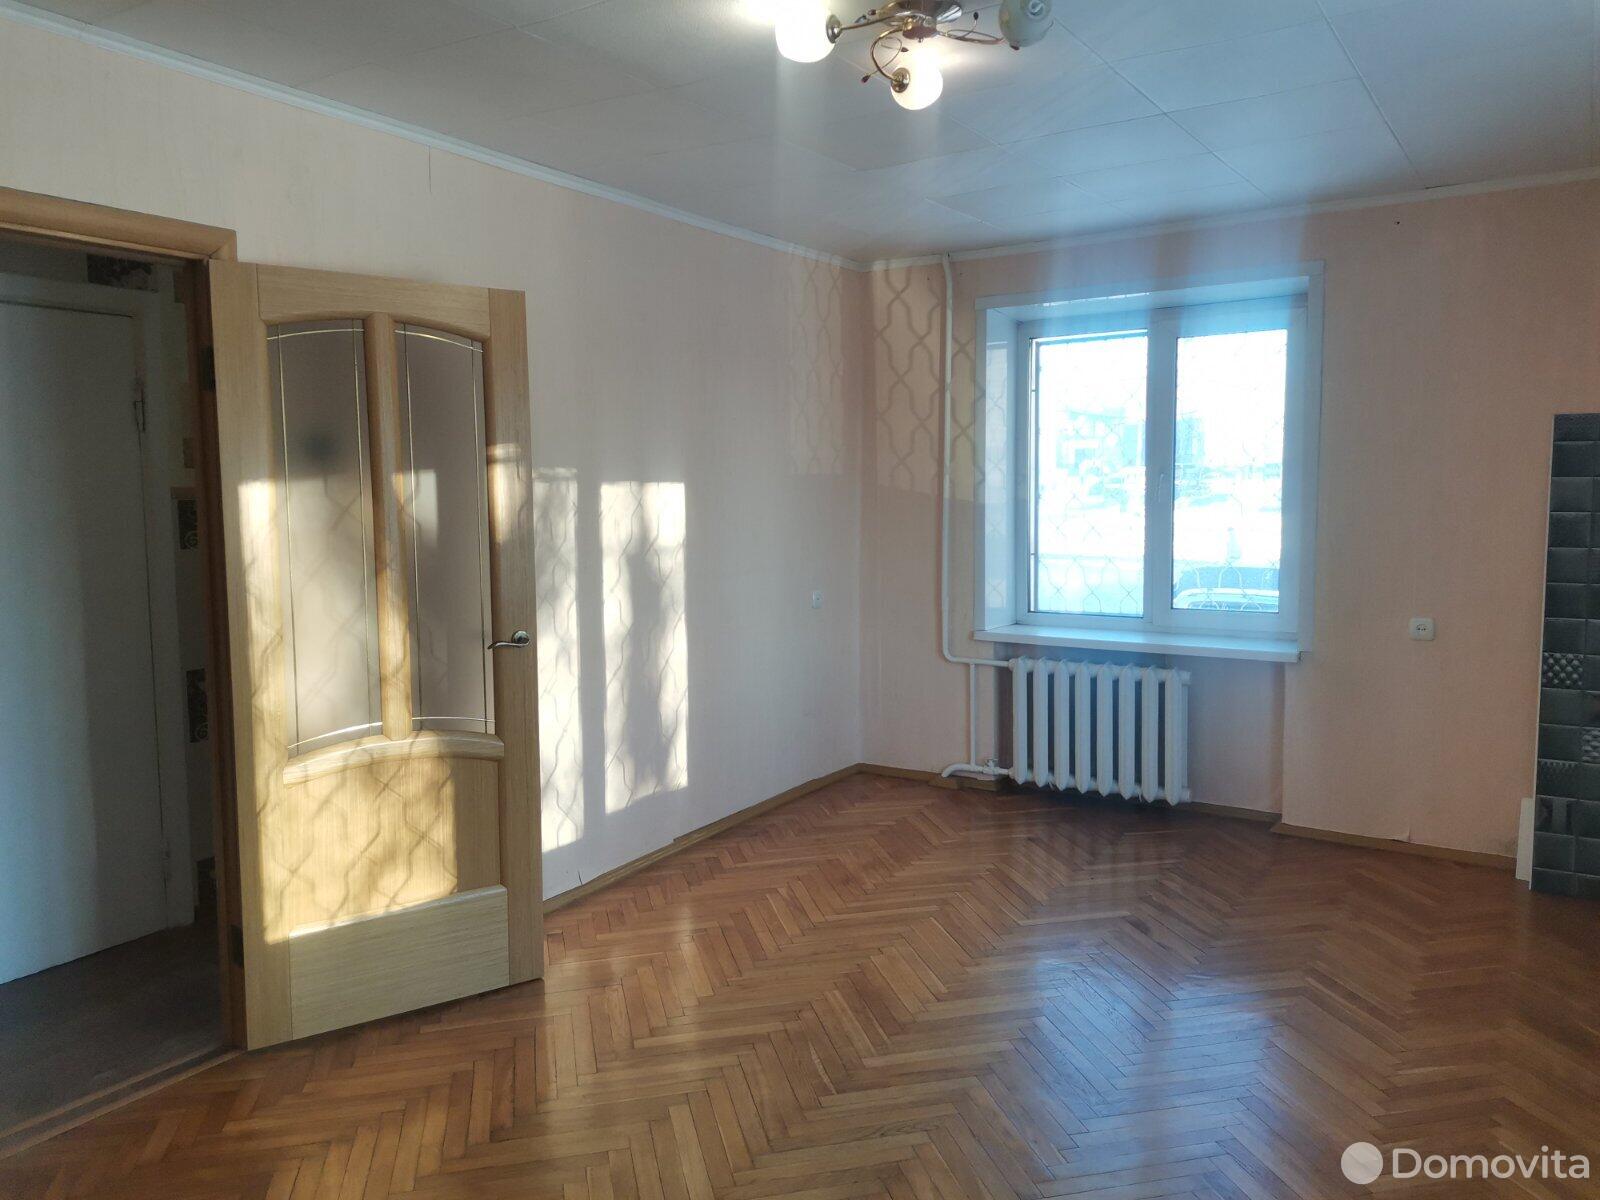 Цена продажи квартиры, Борисов, ул. Чапаева, д. 32